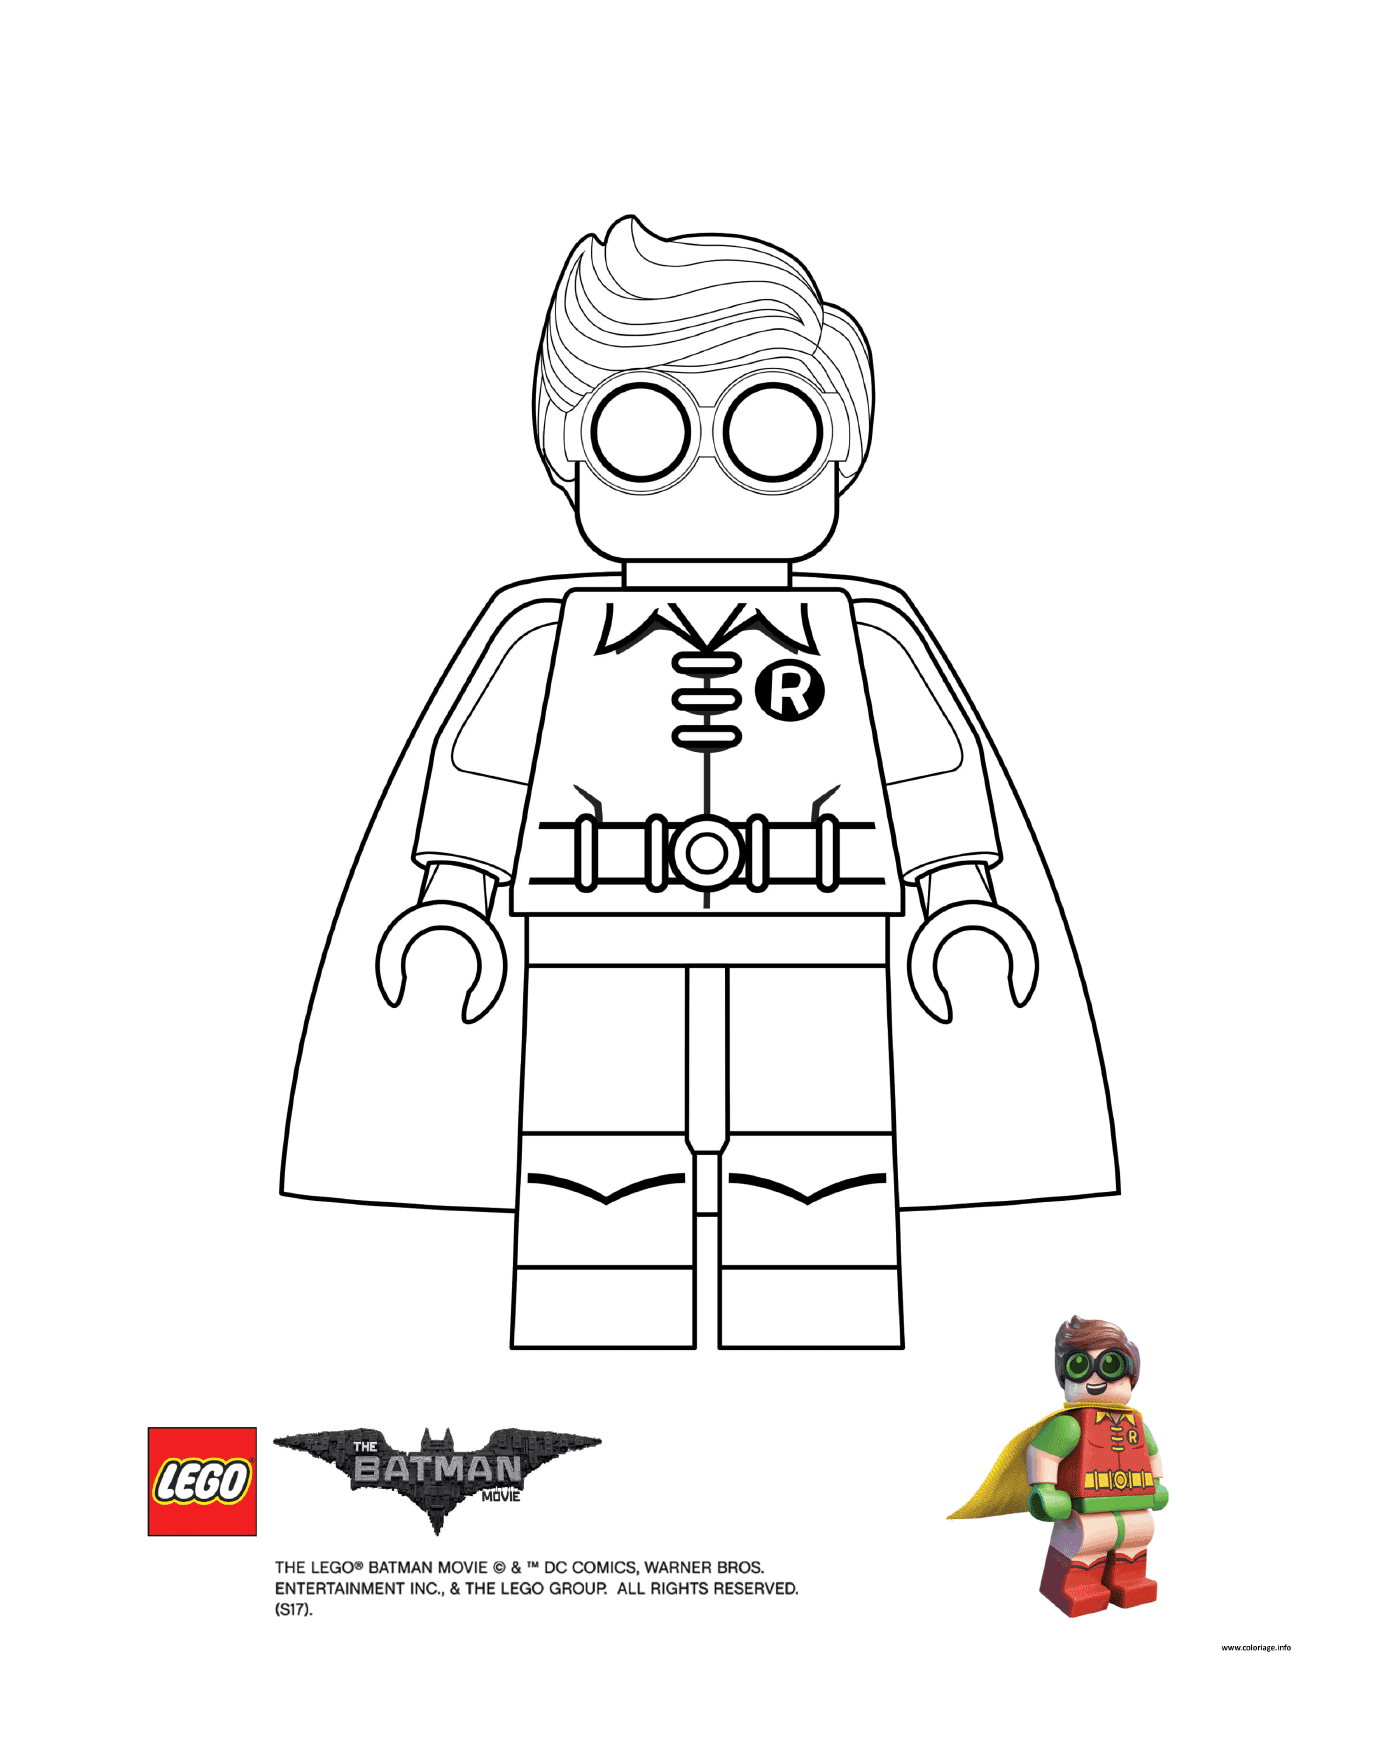  Robin no filme Lego Batman 